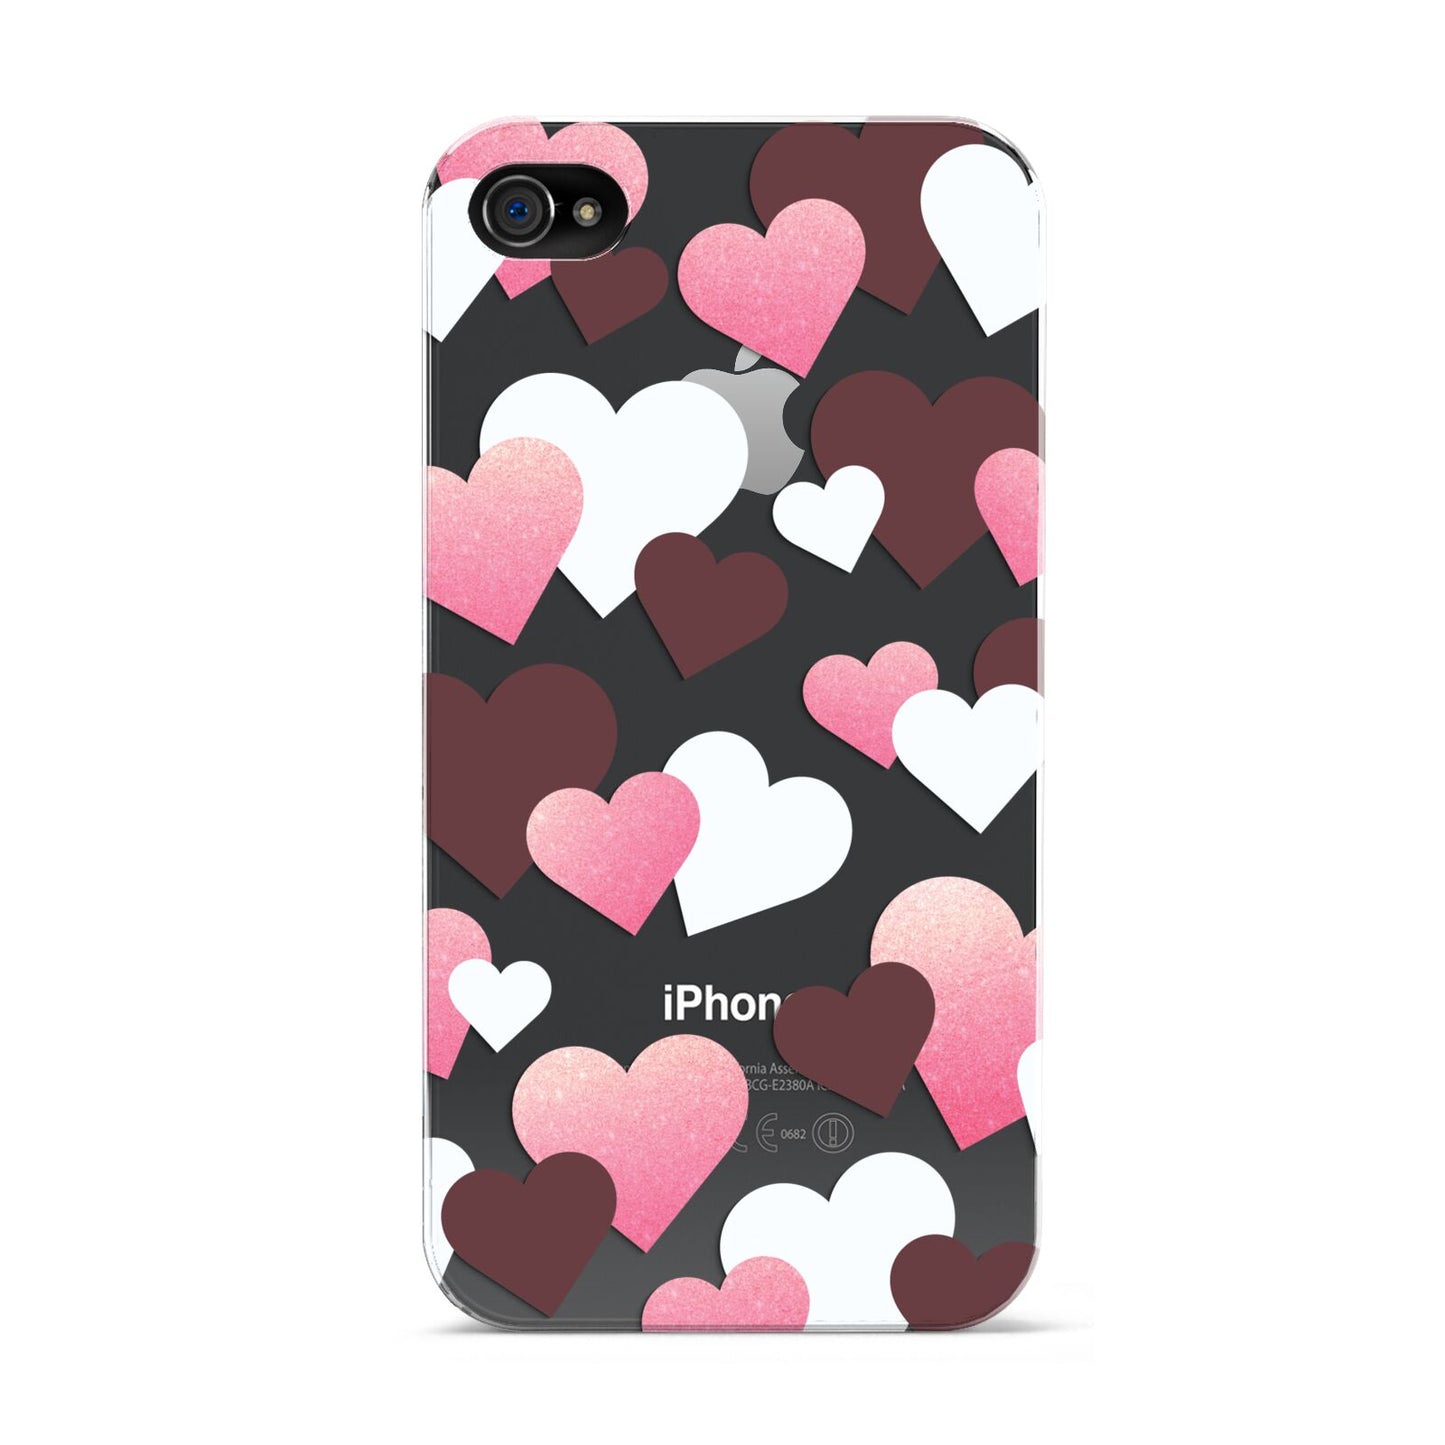 Hearts Apple iPhone 4s Case